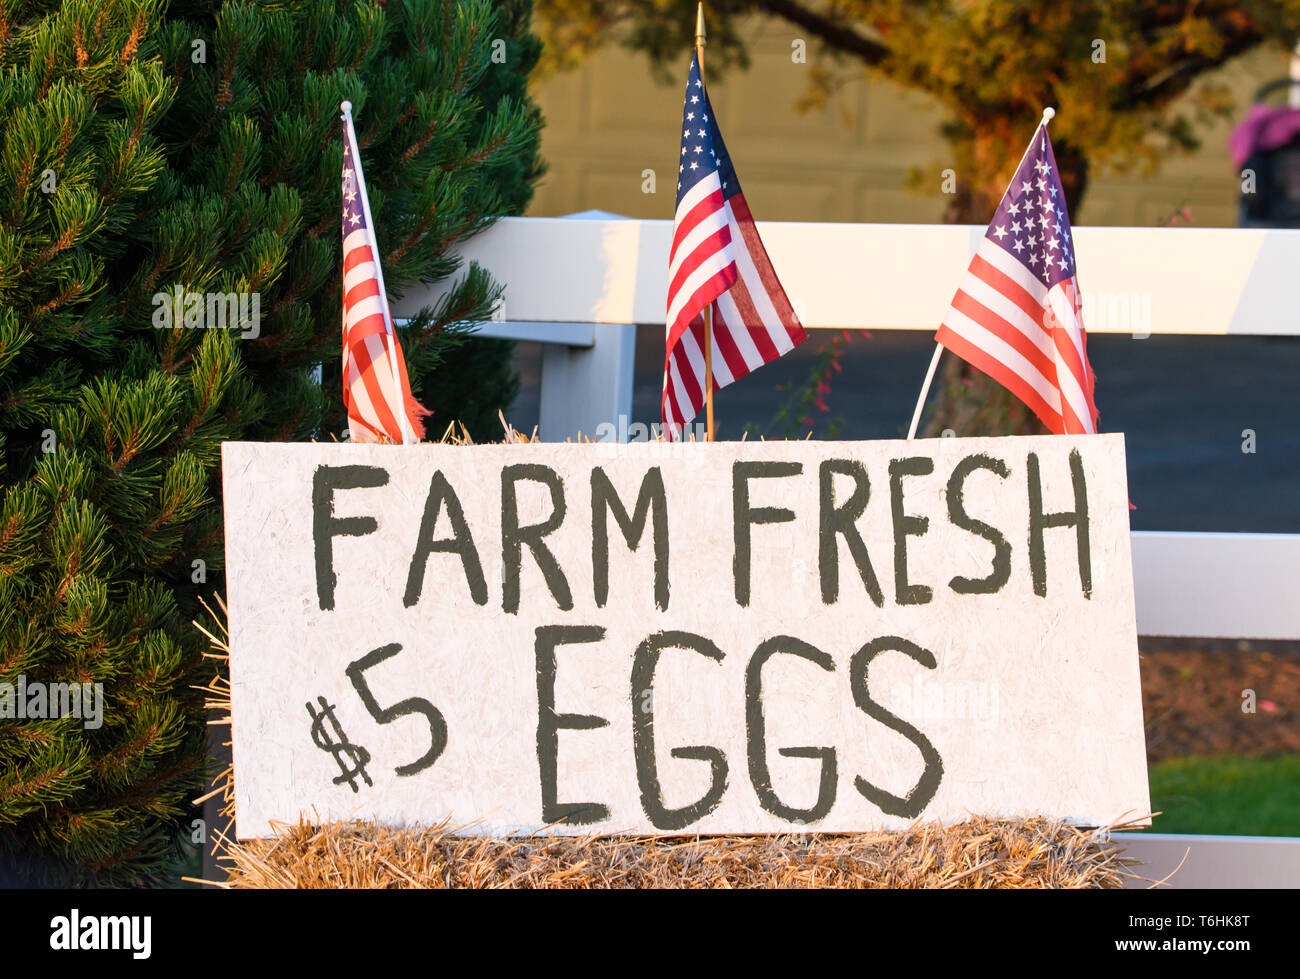 Proud American Farmers Patriotically Selling Farm Fresh Eggs Roadside in Central Oregon Stock Photo